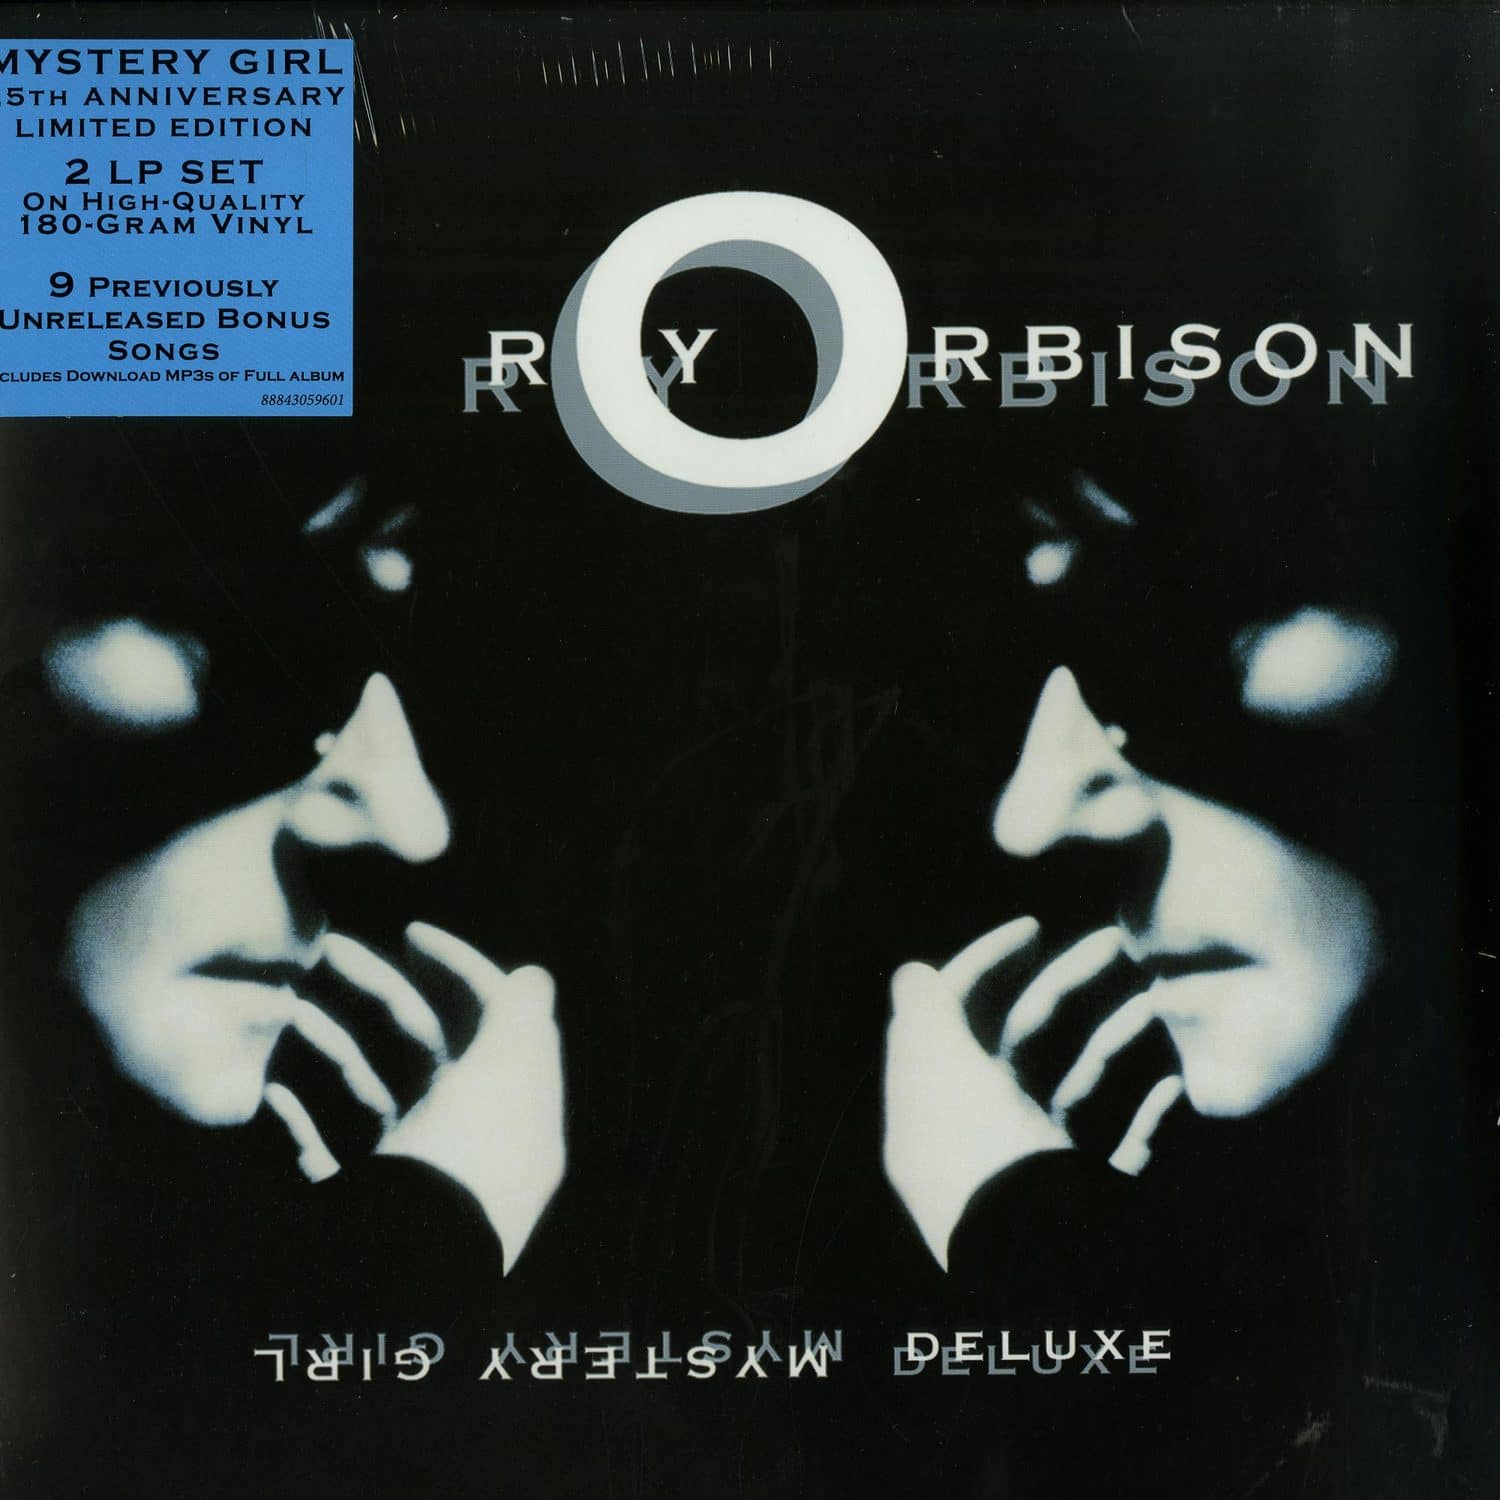 Roy Orbison - MYSTERY GIRL DELUXE 